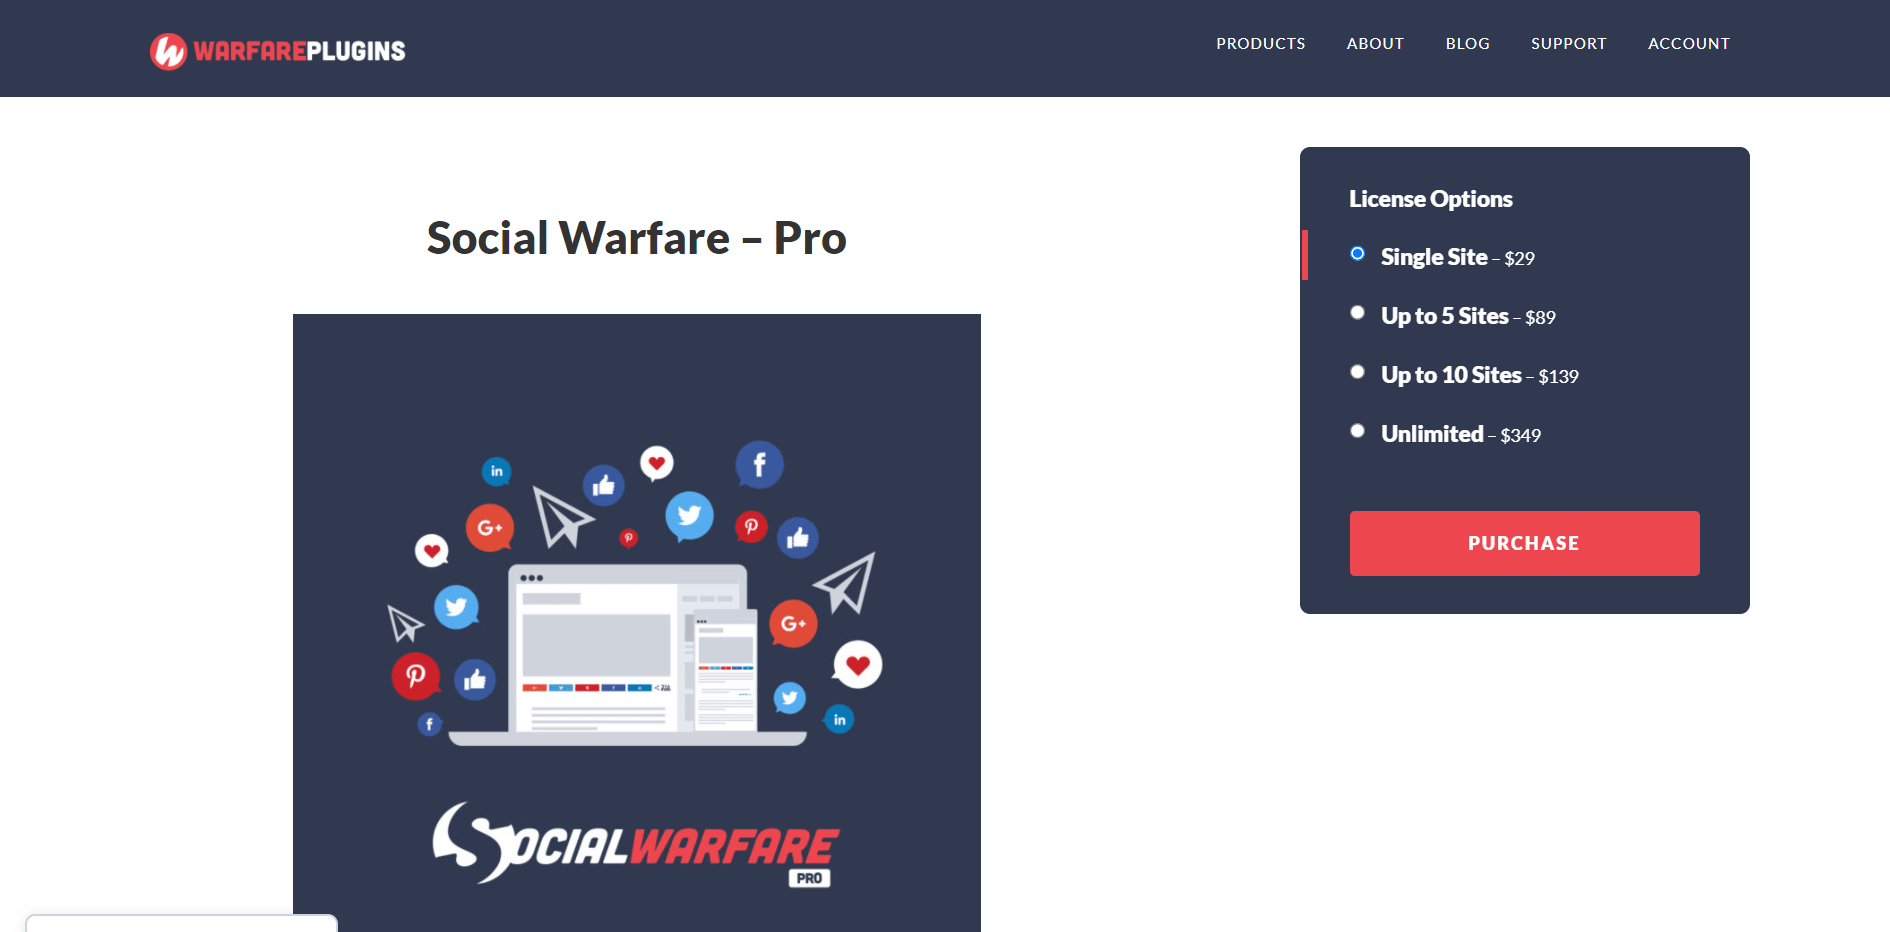 Social Warfare Plugins pricing